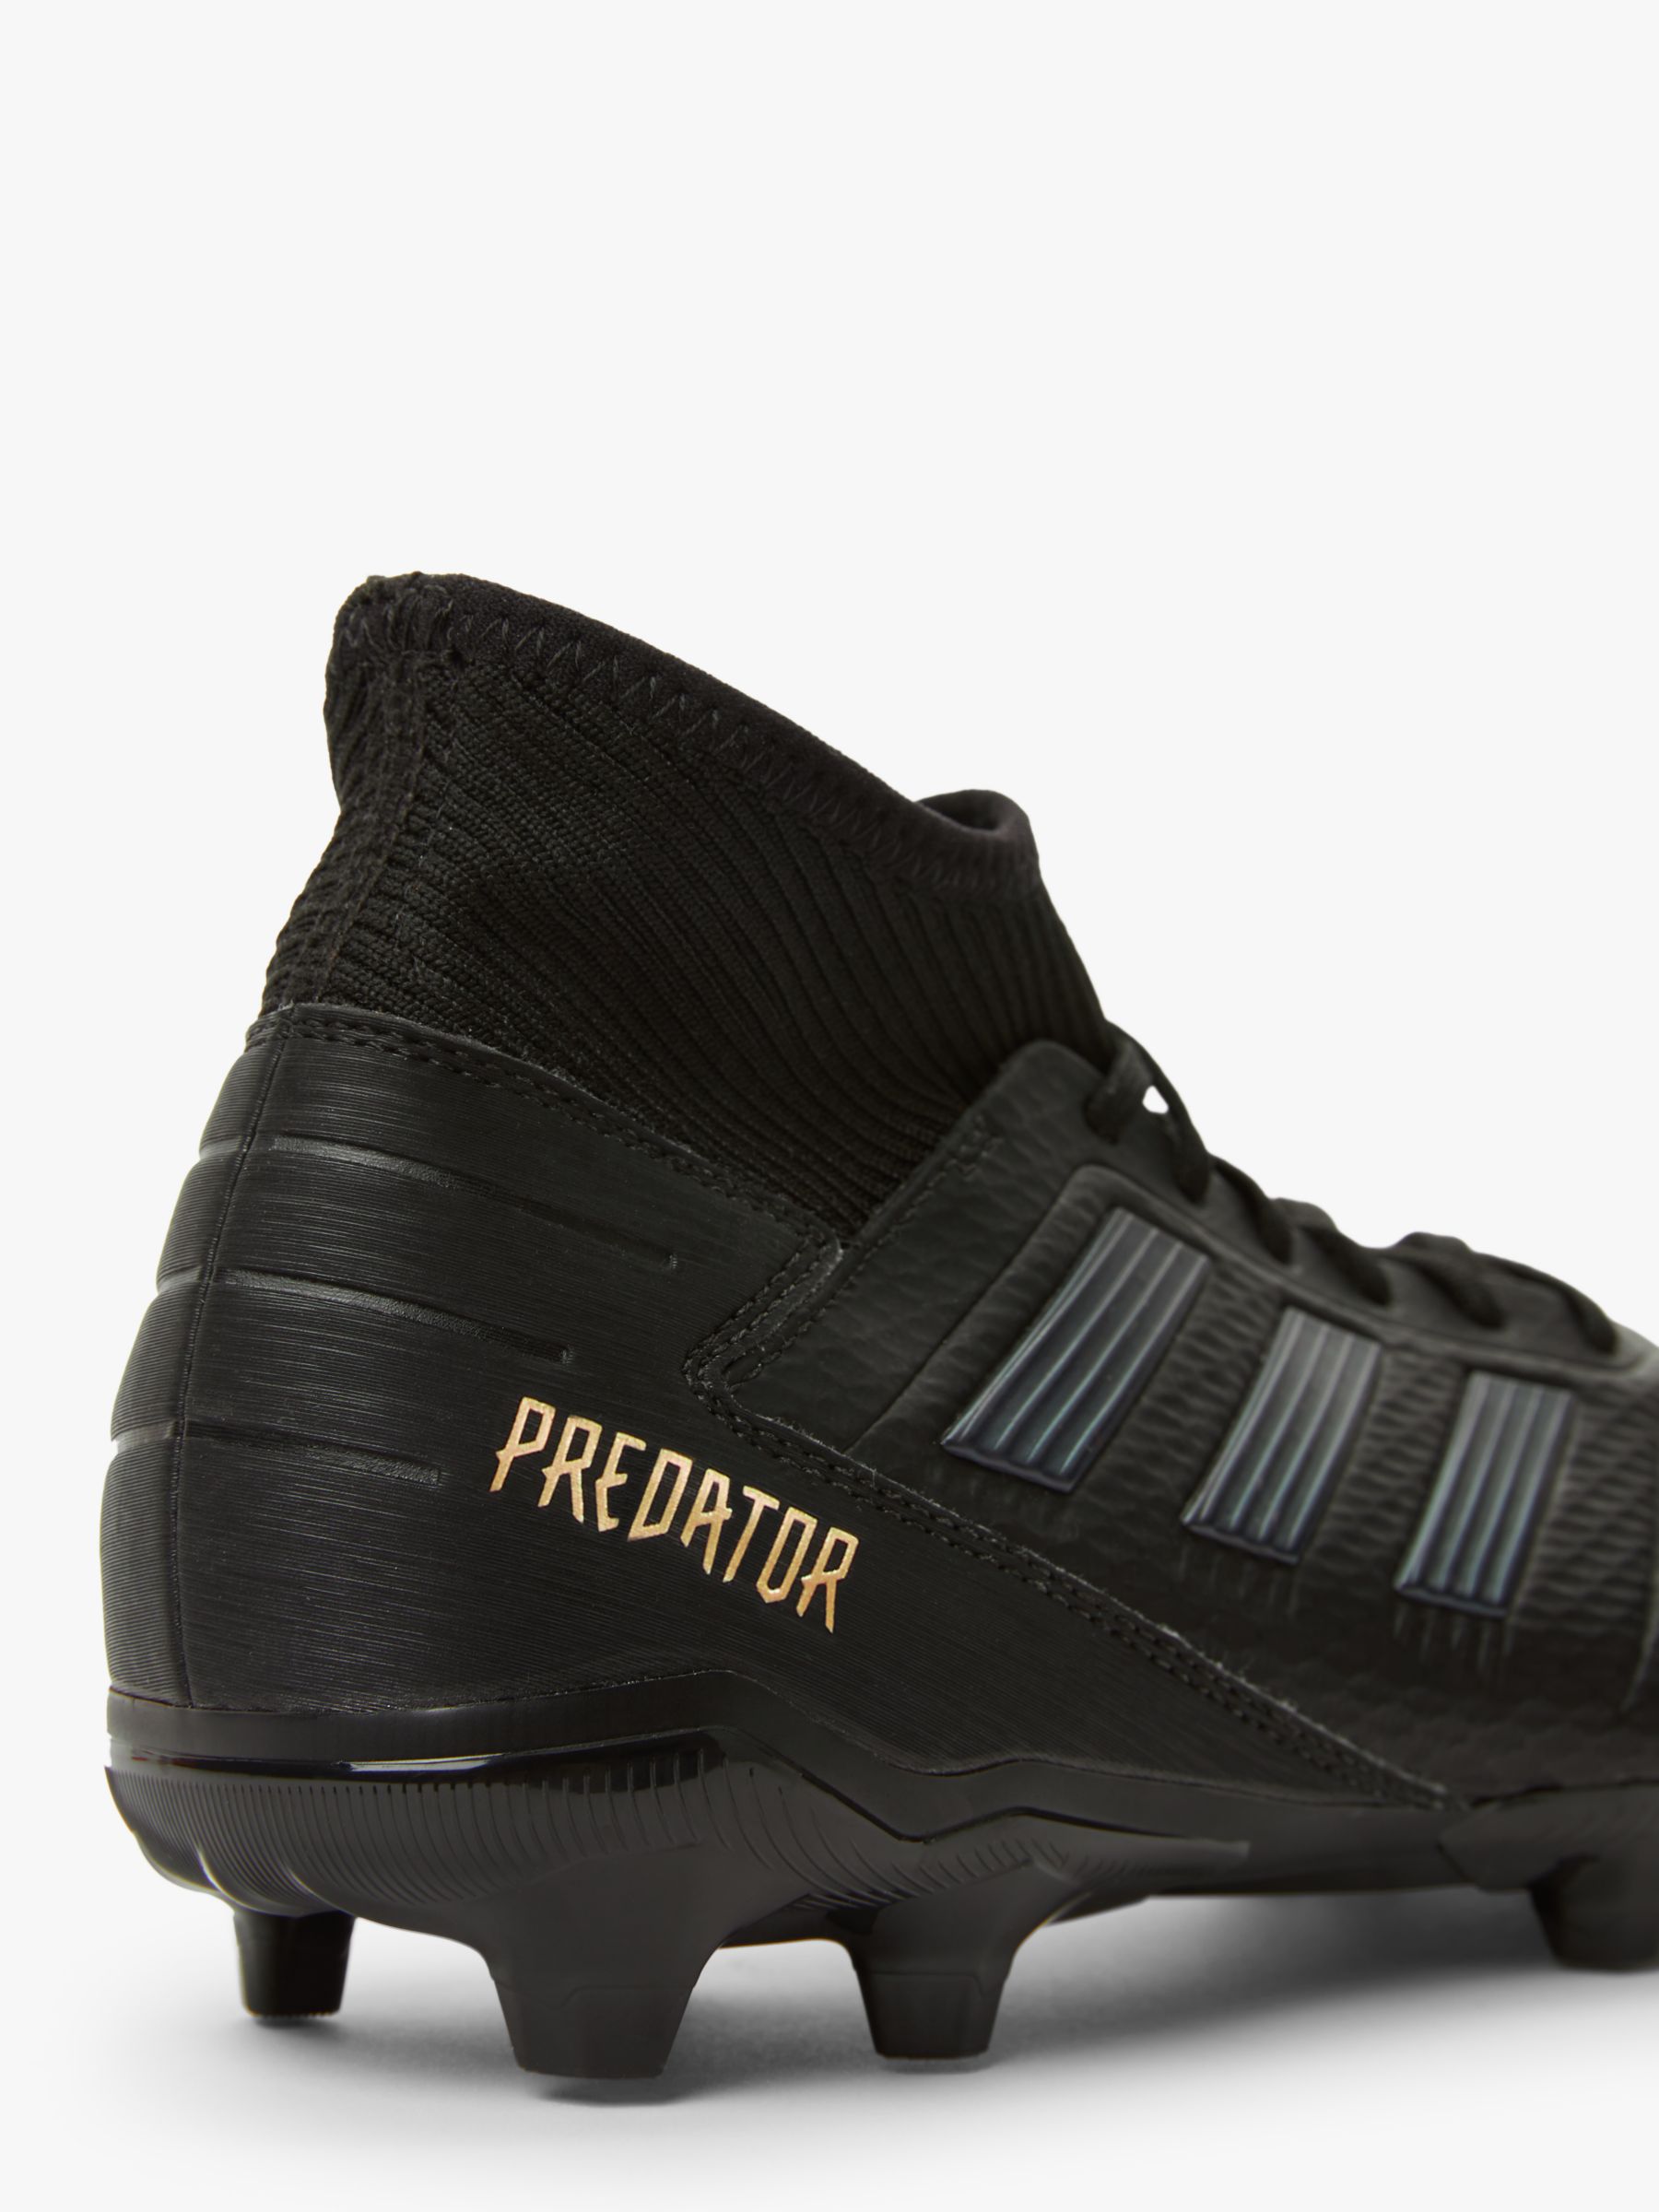 adidas predator 19.3 gold